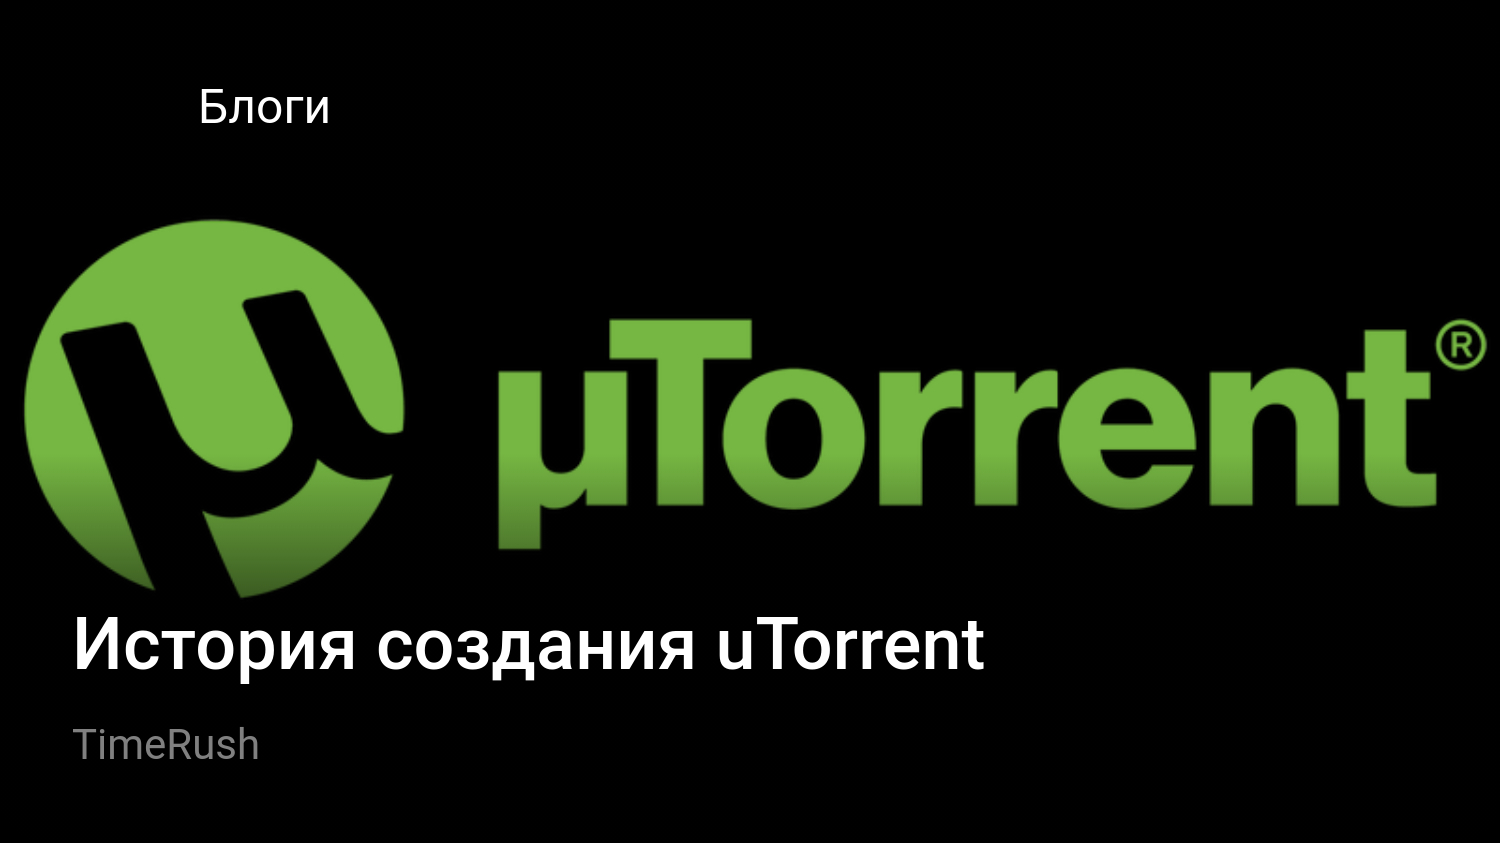 Qtorent. Utorrent. Utorrent логотип. Utorrent картинки. Ярлык utorrent.